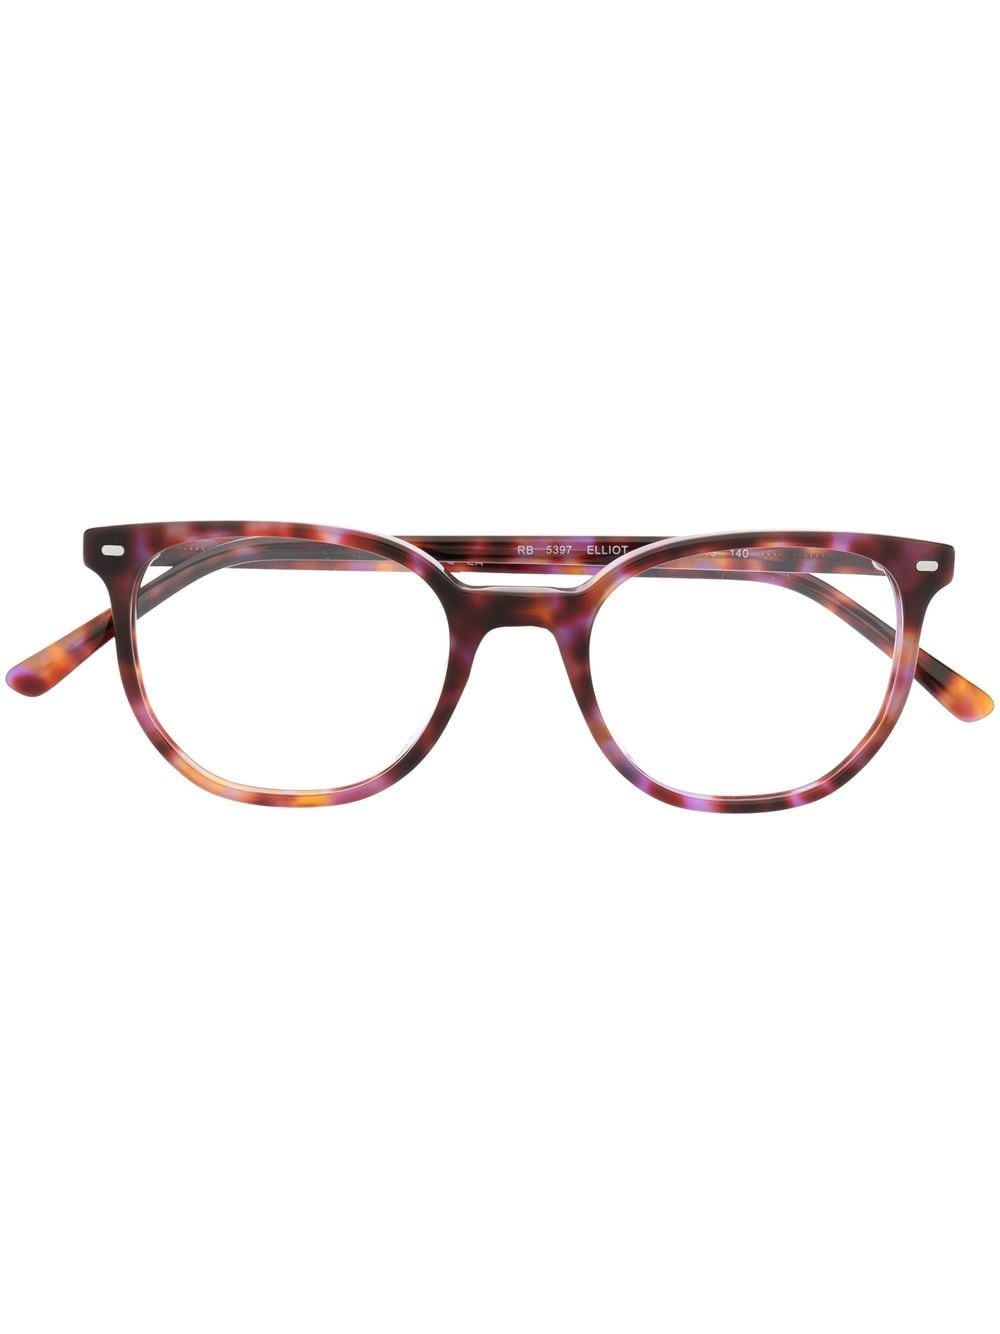 Ray-Ban Elliot square-frame optical glasses - Brown von Ray-Ban